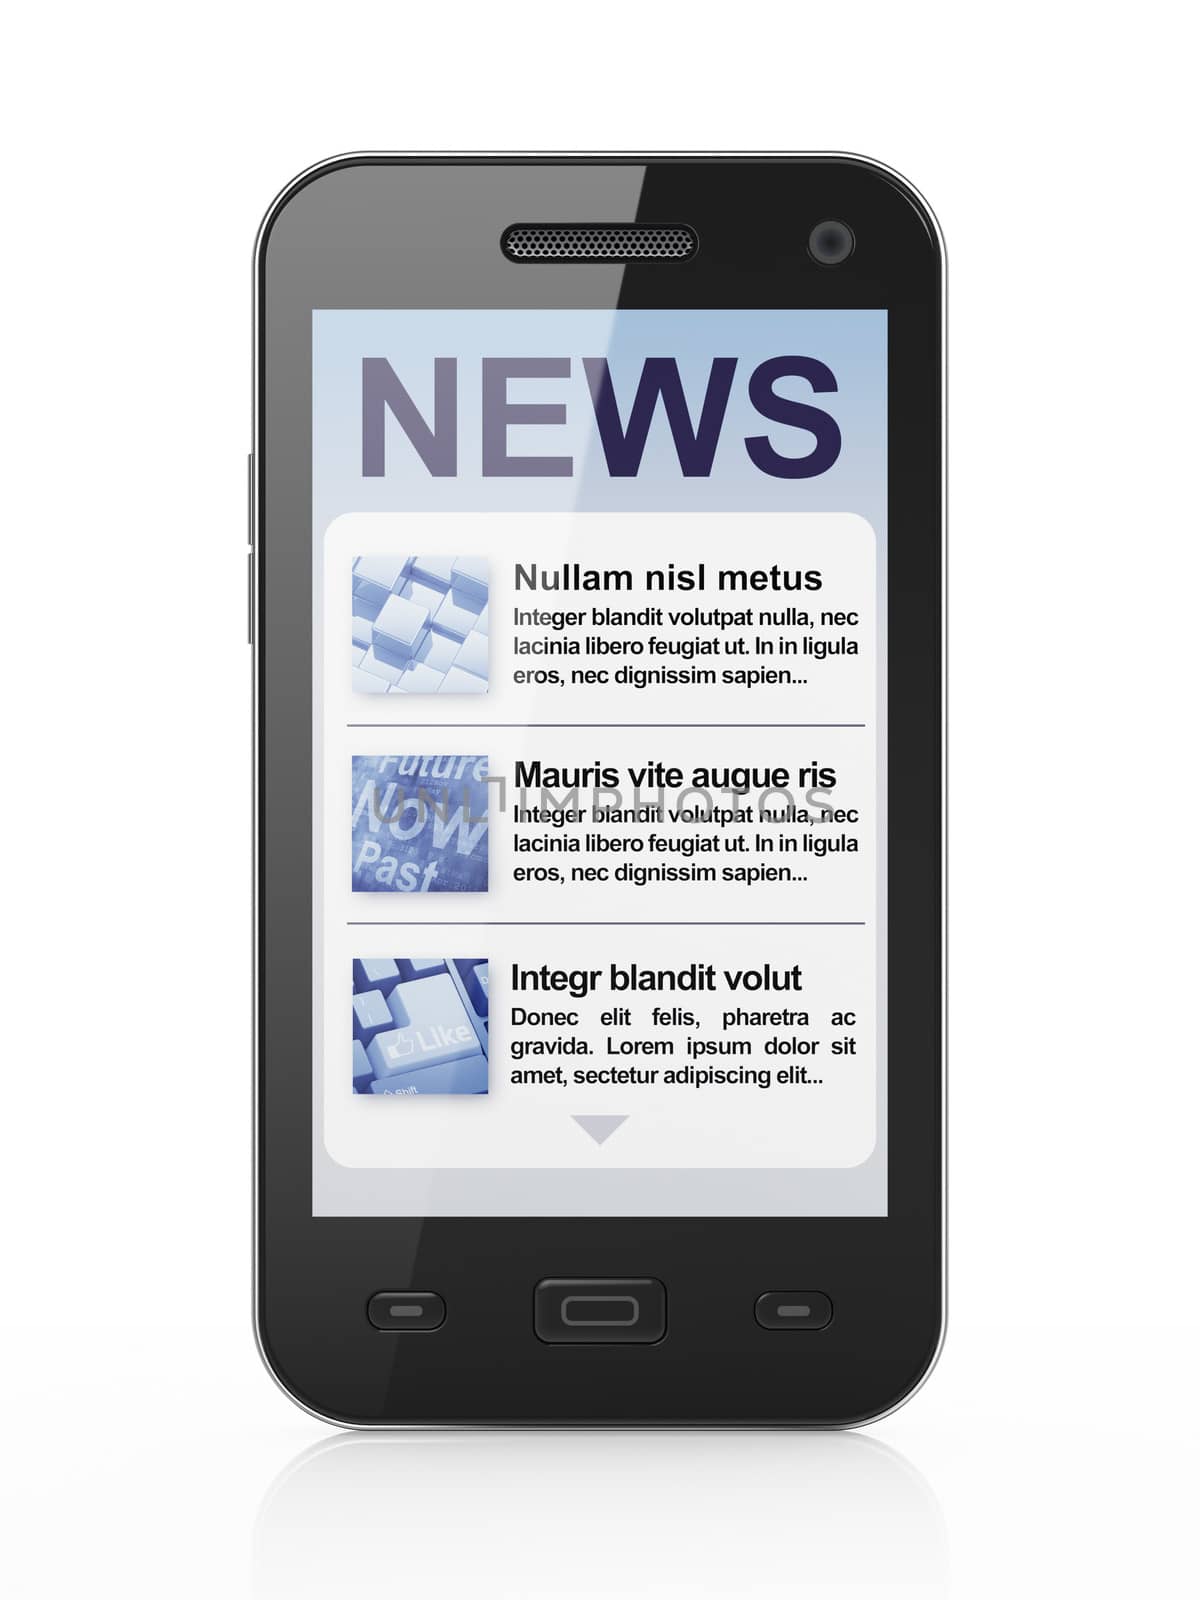 Digital news on smartphone screen by maxkabakov